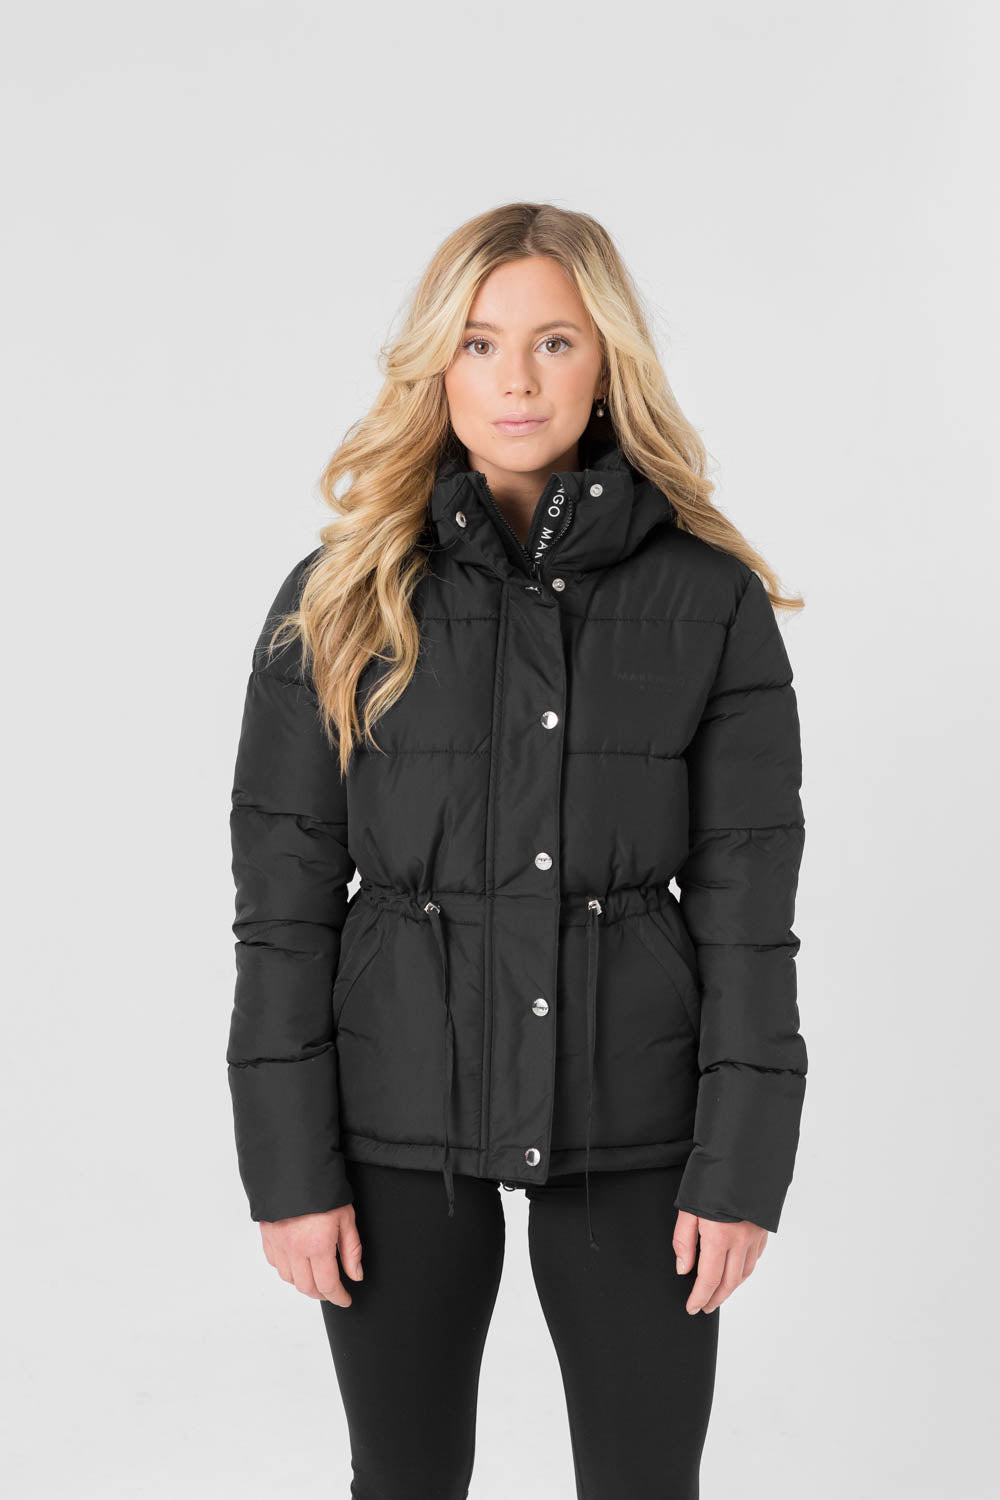 Black padded jacket front